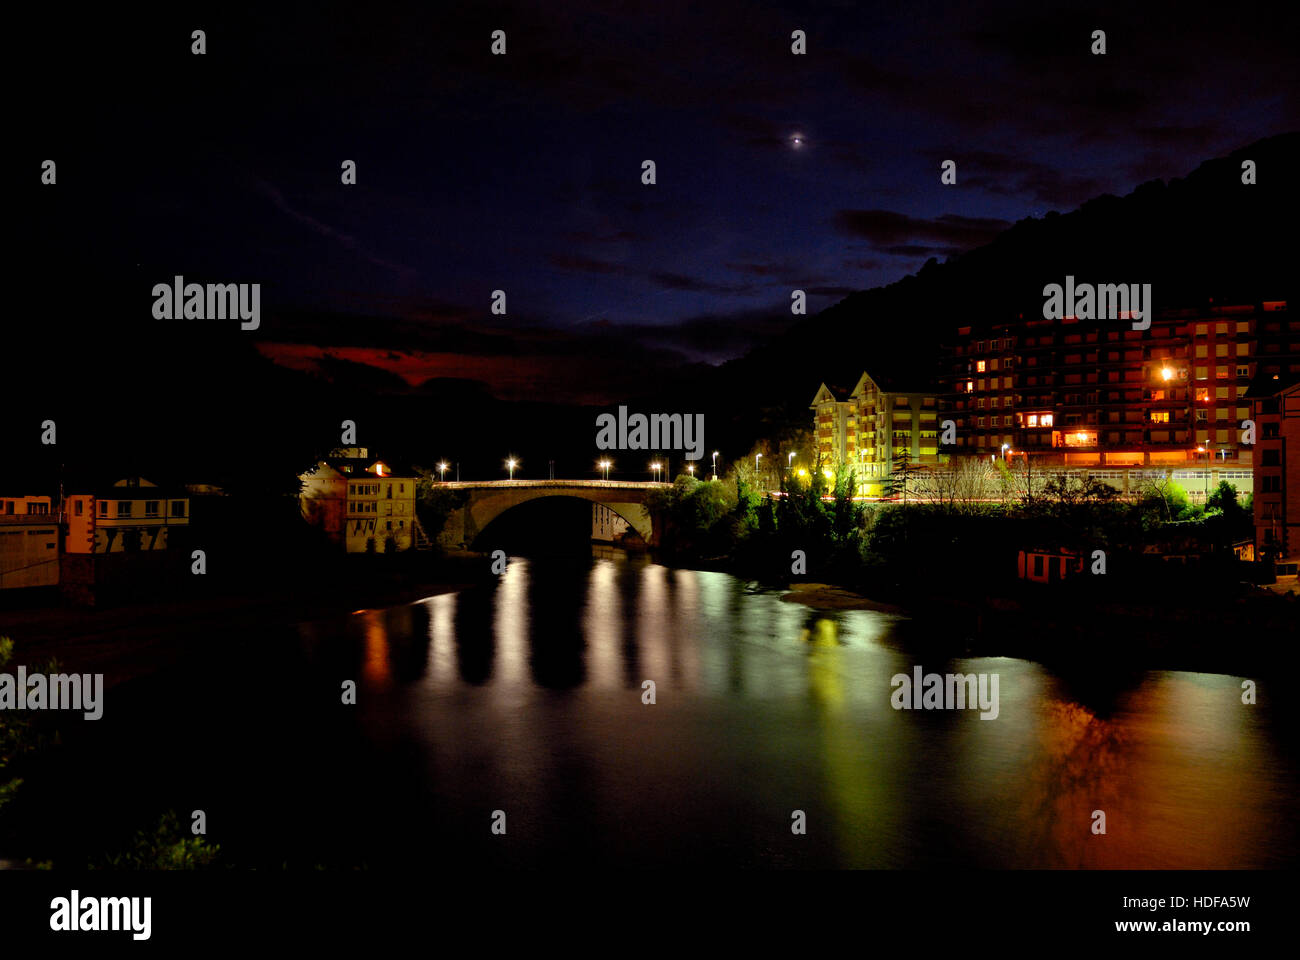 Image of the coastal town of Lekeitio at night Stock Photo